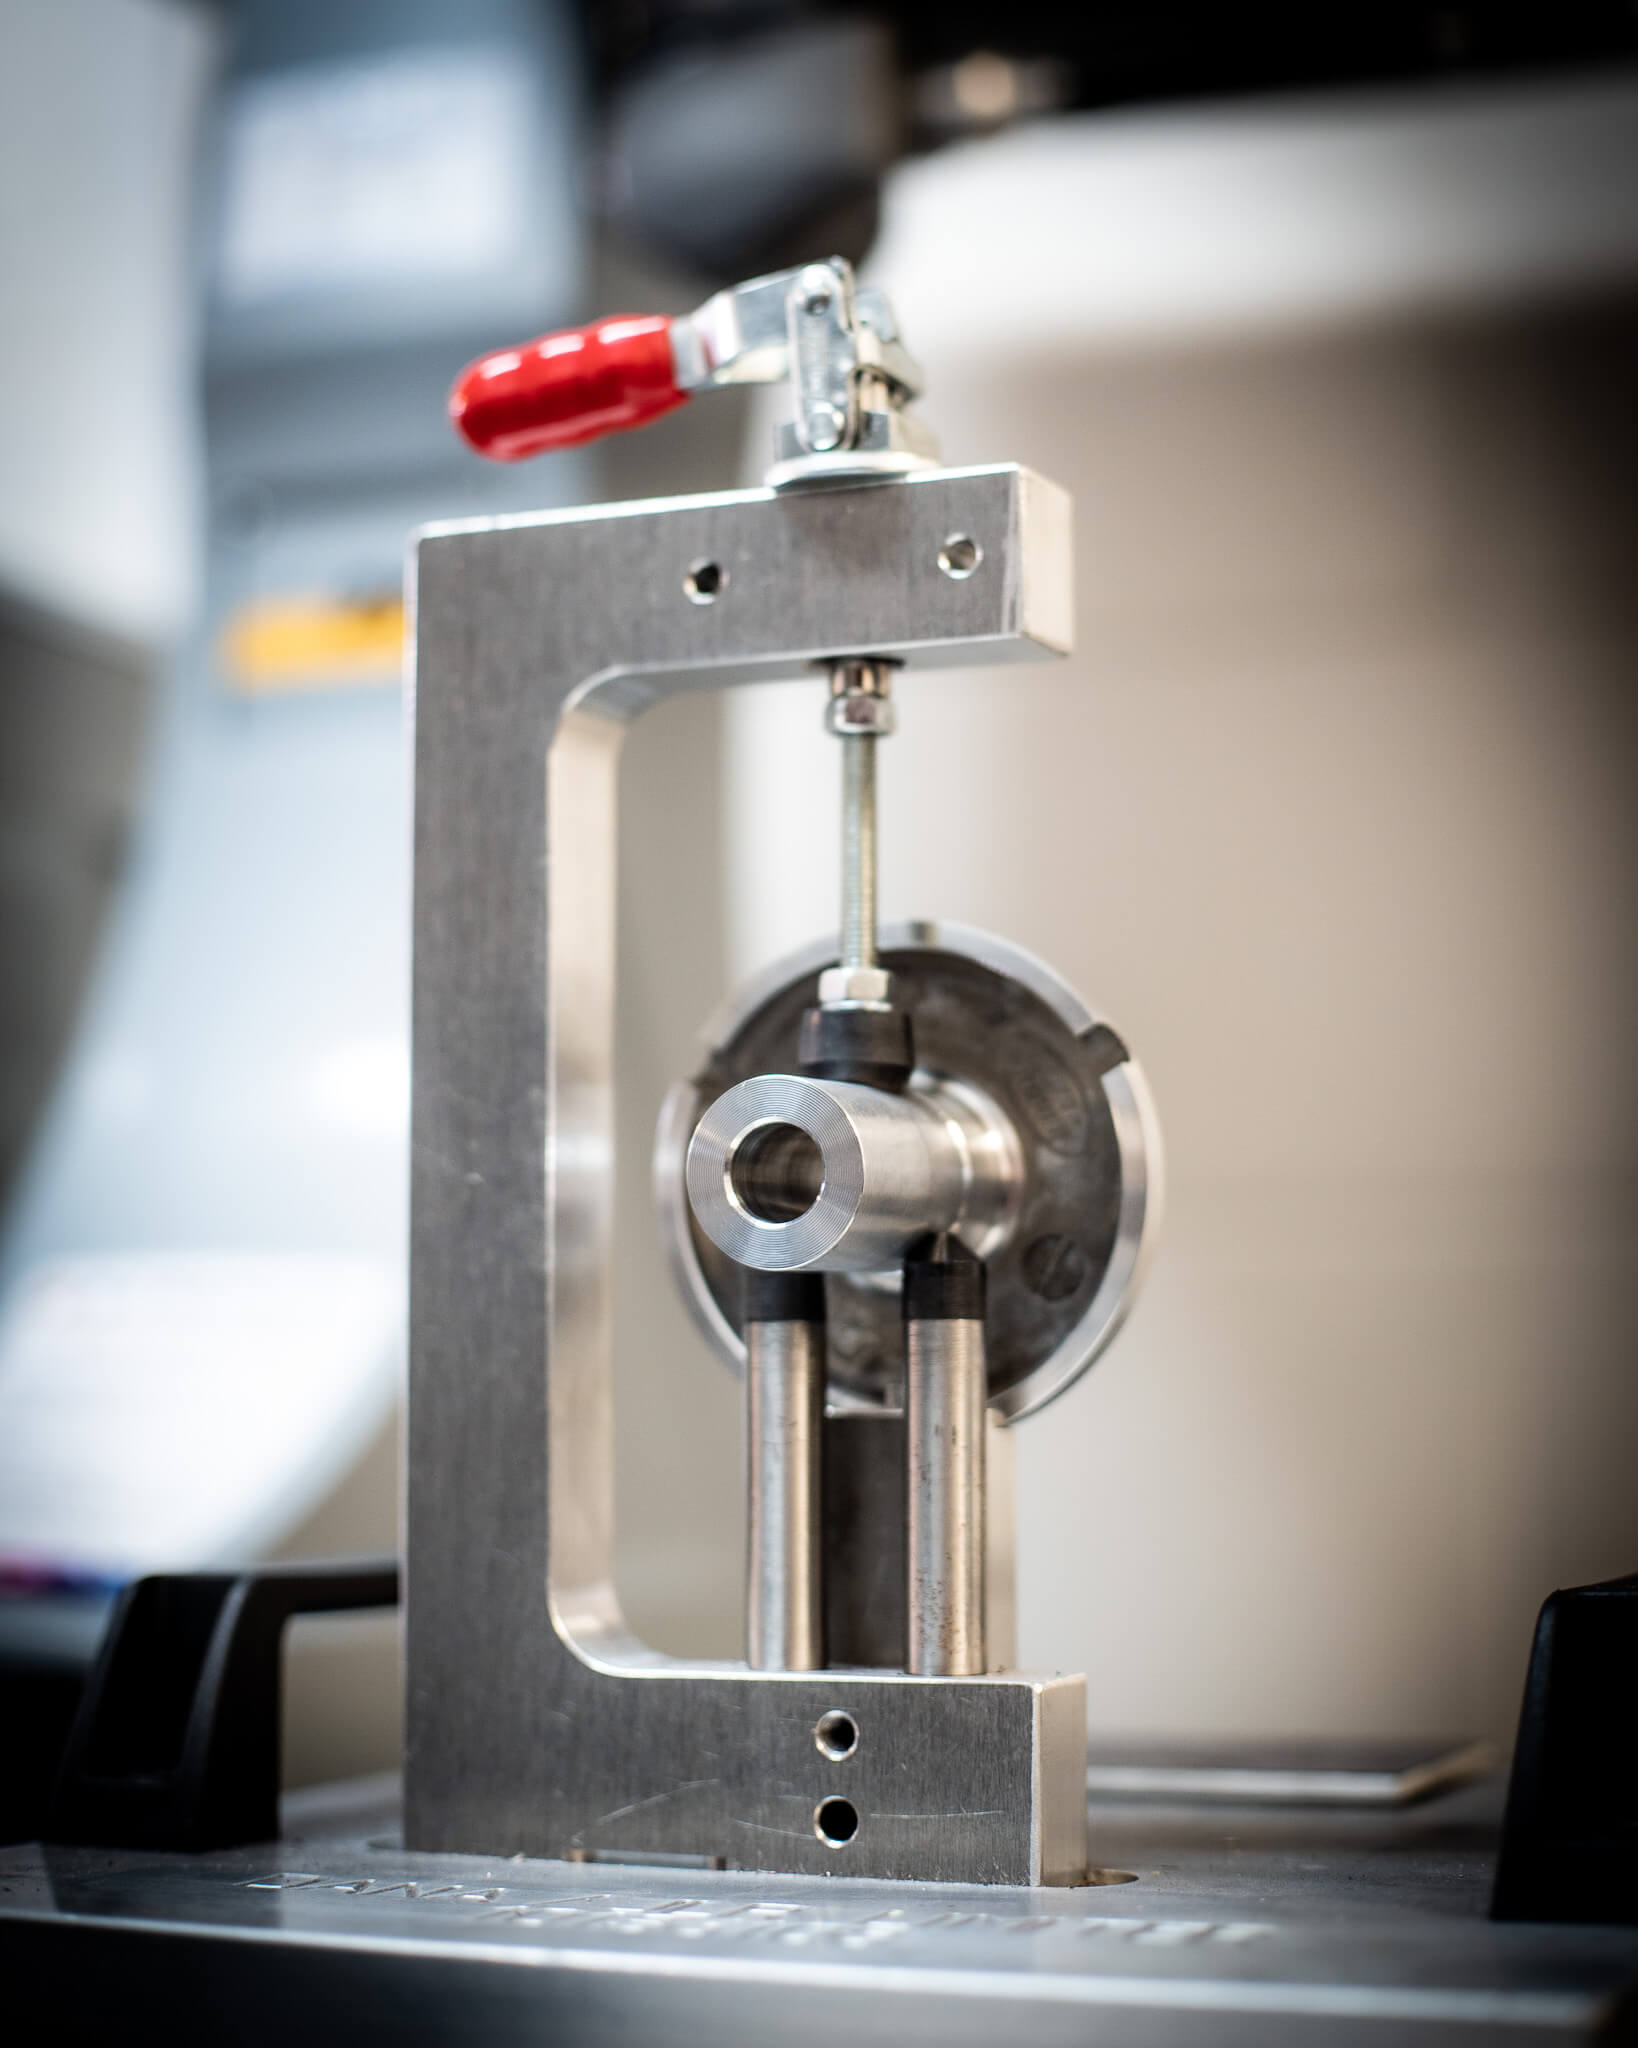 CastAlum's smallest part on our smallest coordinate measuring machine in our machining centre